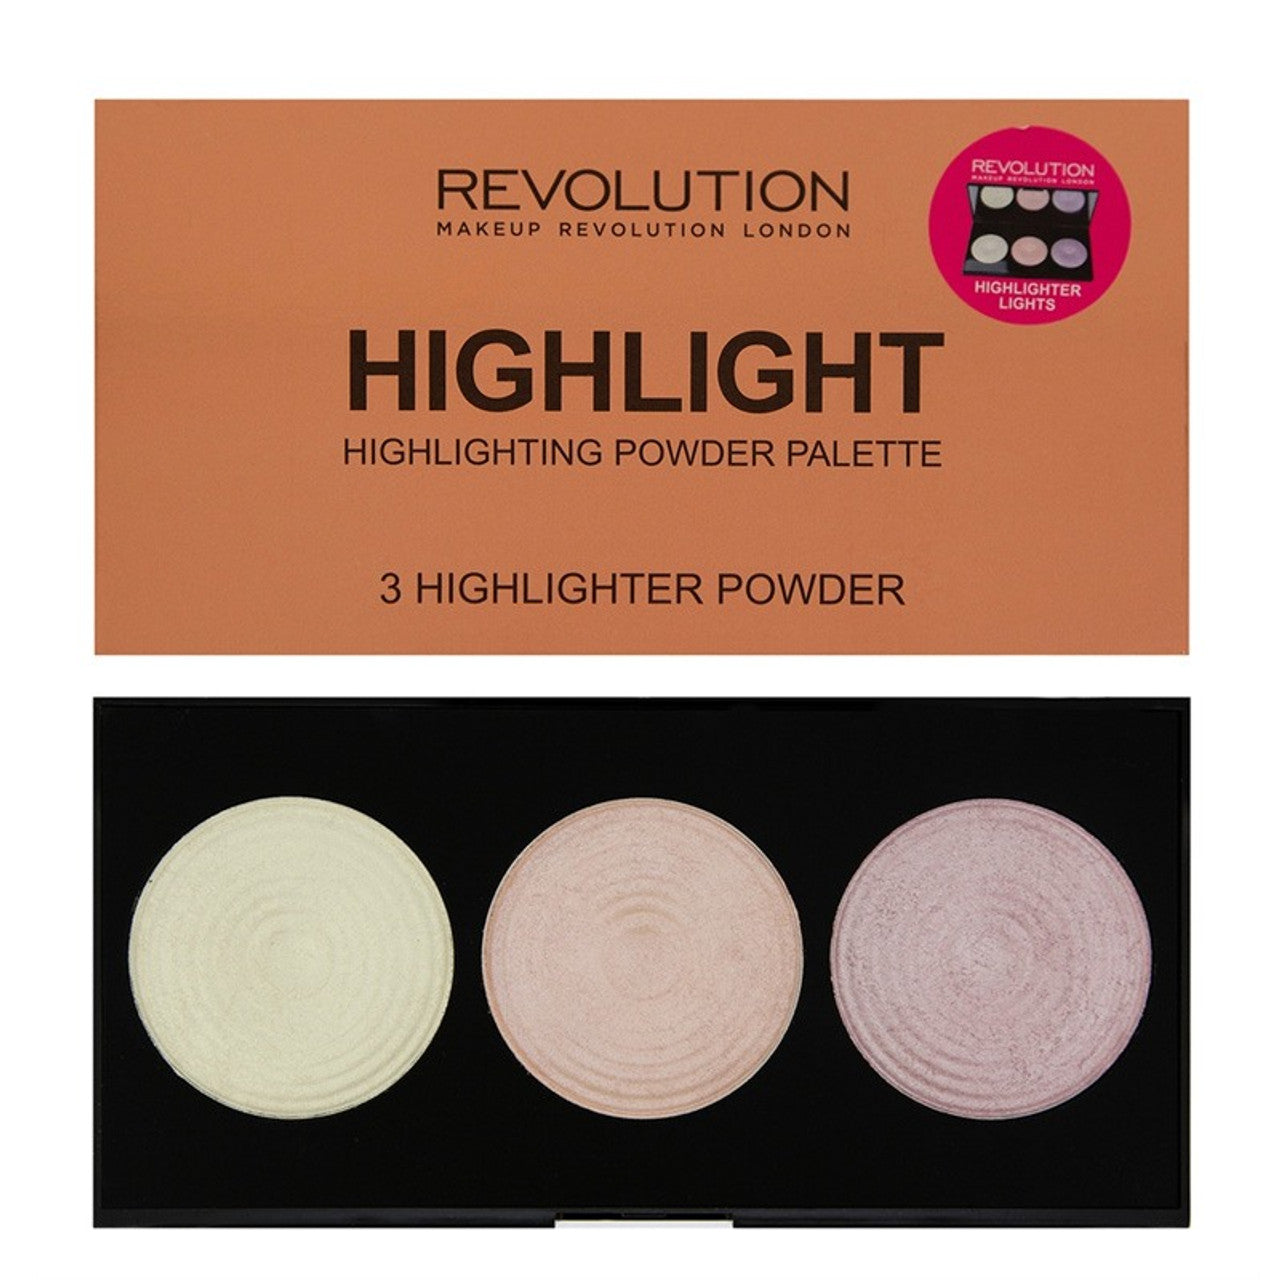 Revolution Highlighting Powder Palette